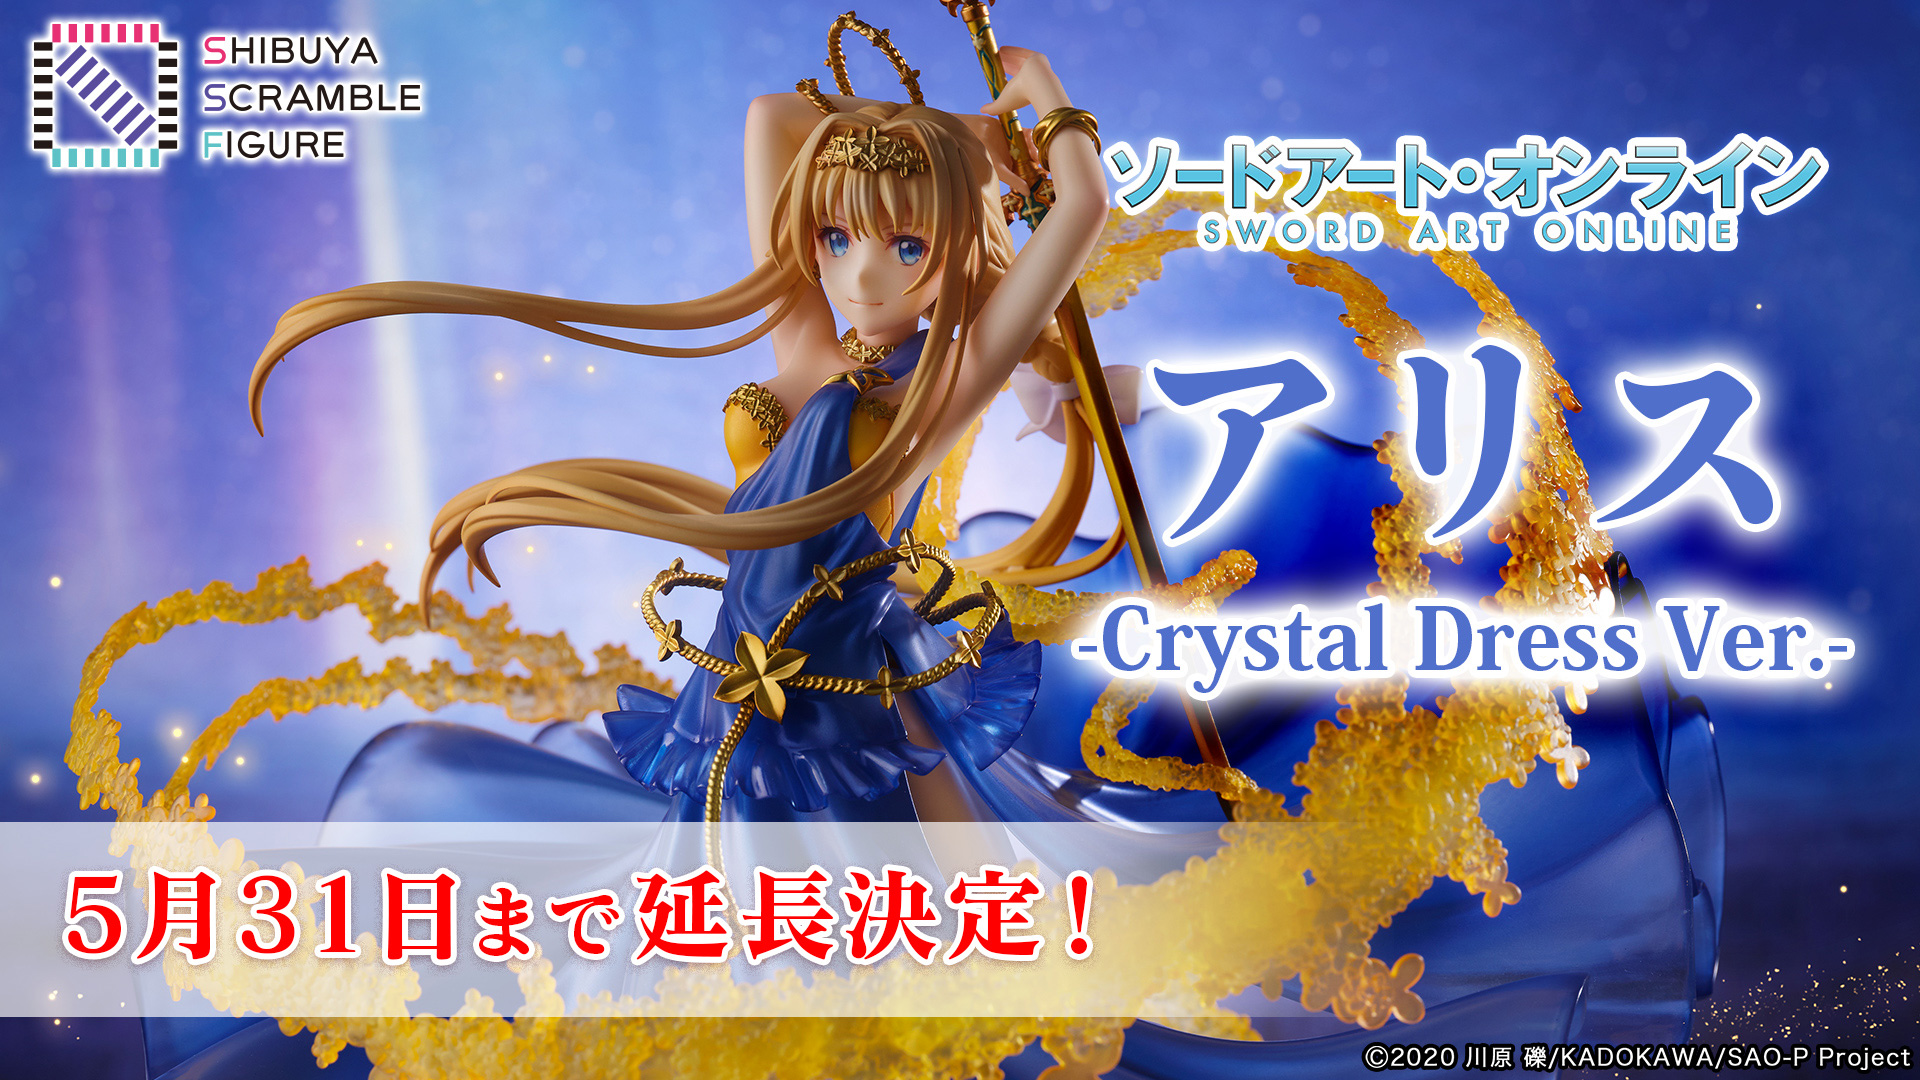 SHIBUYA SCRAMBLE FIGURE、『SAO』より「アリス -Crystal Dress Ver 